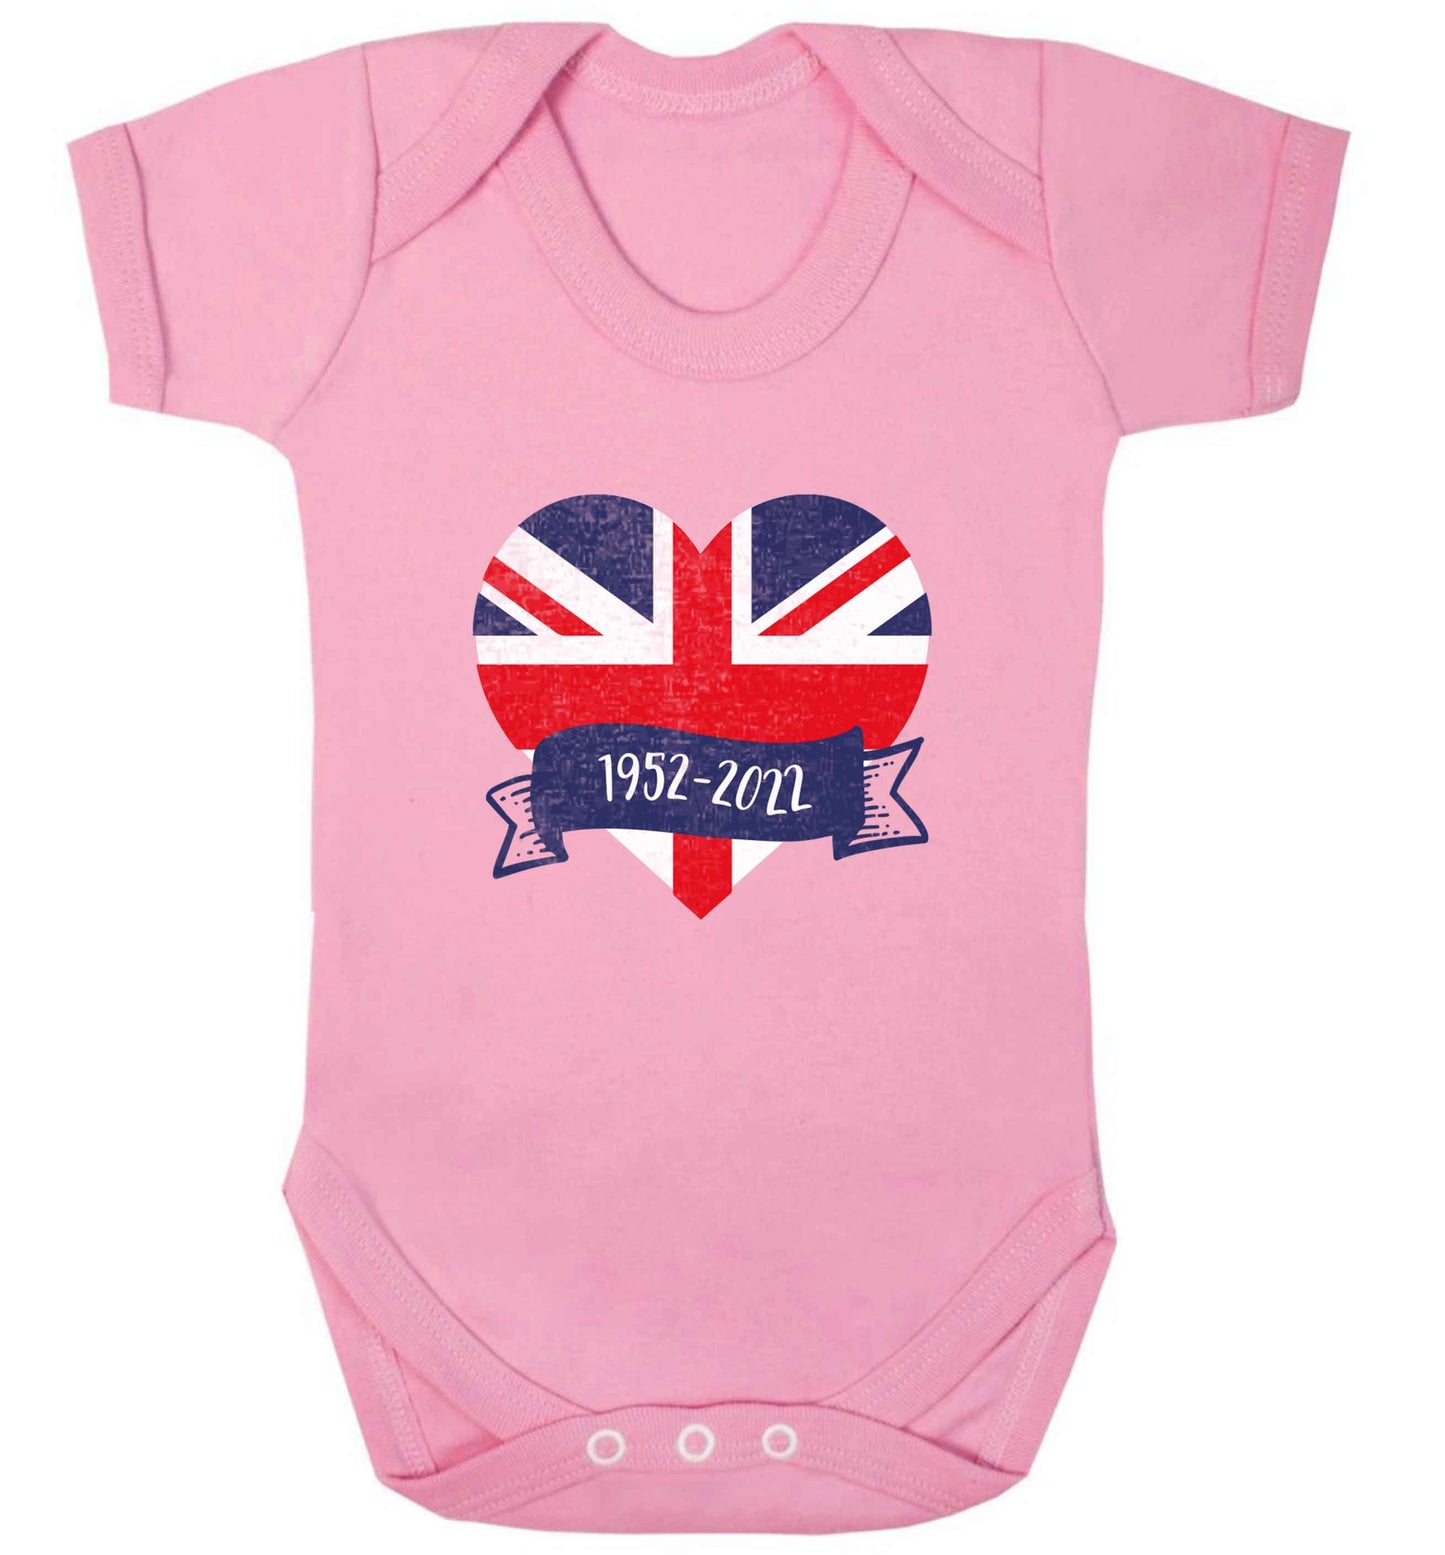 British flag heart Queens jubilee baby vest pale pink 18-24 months